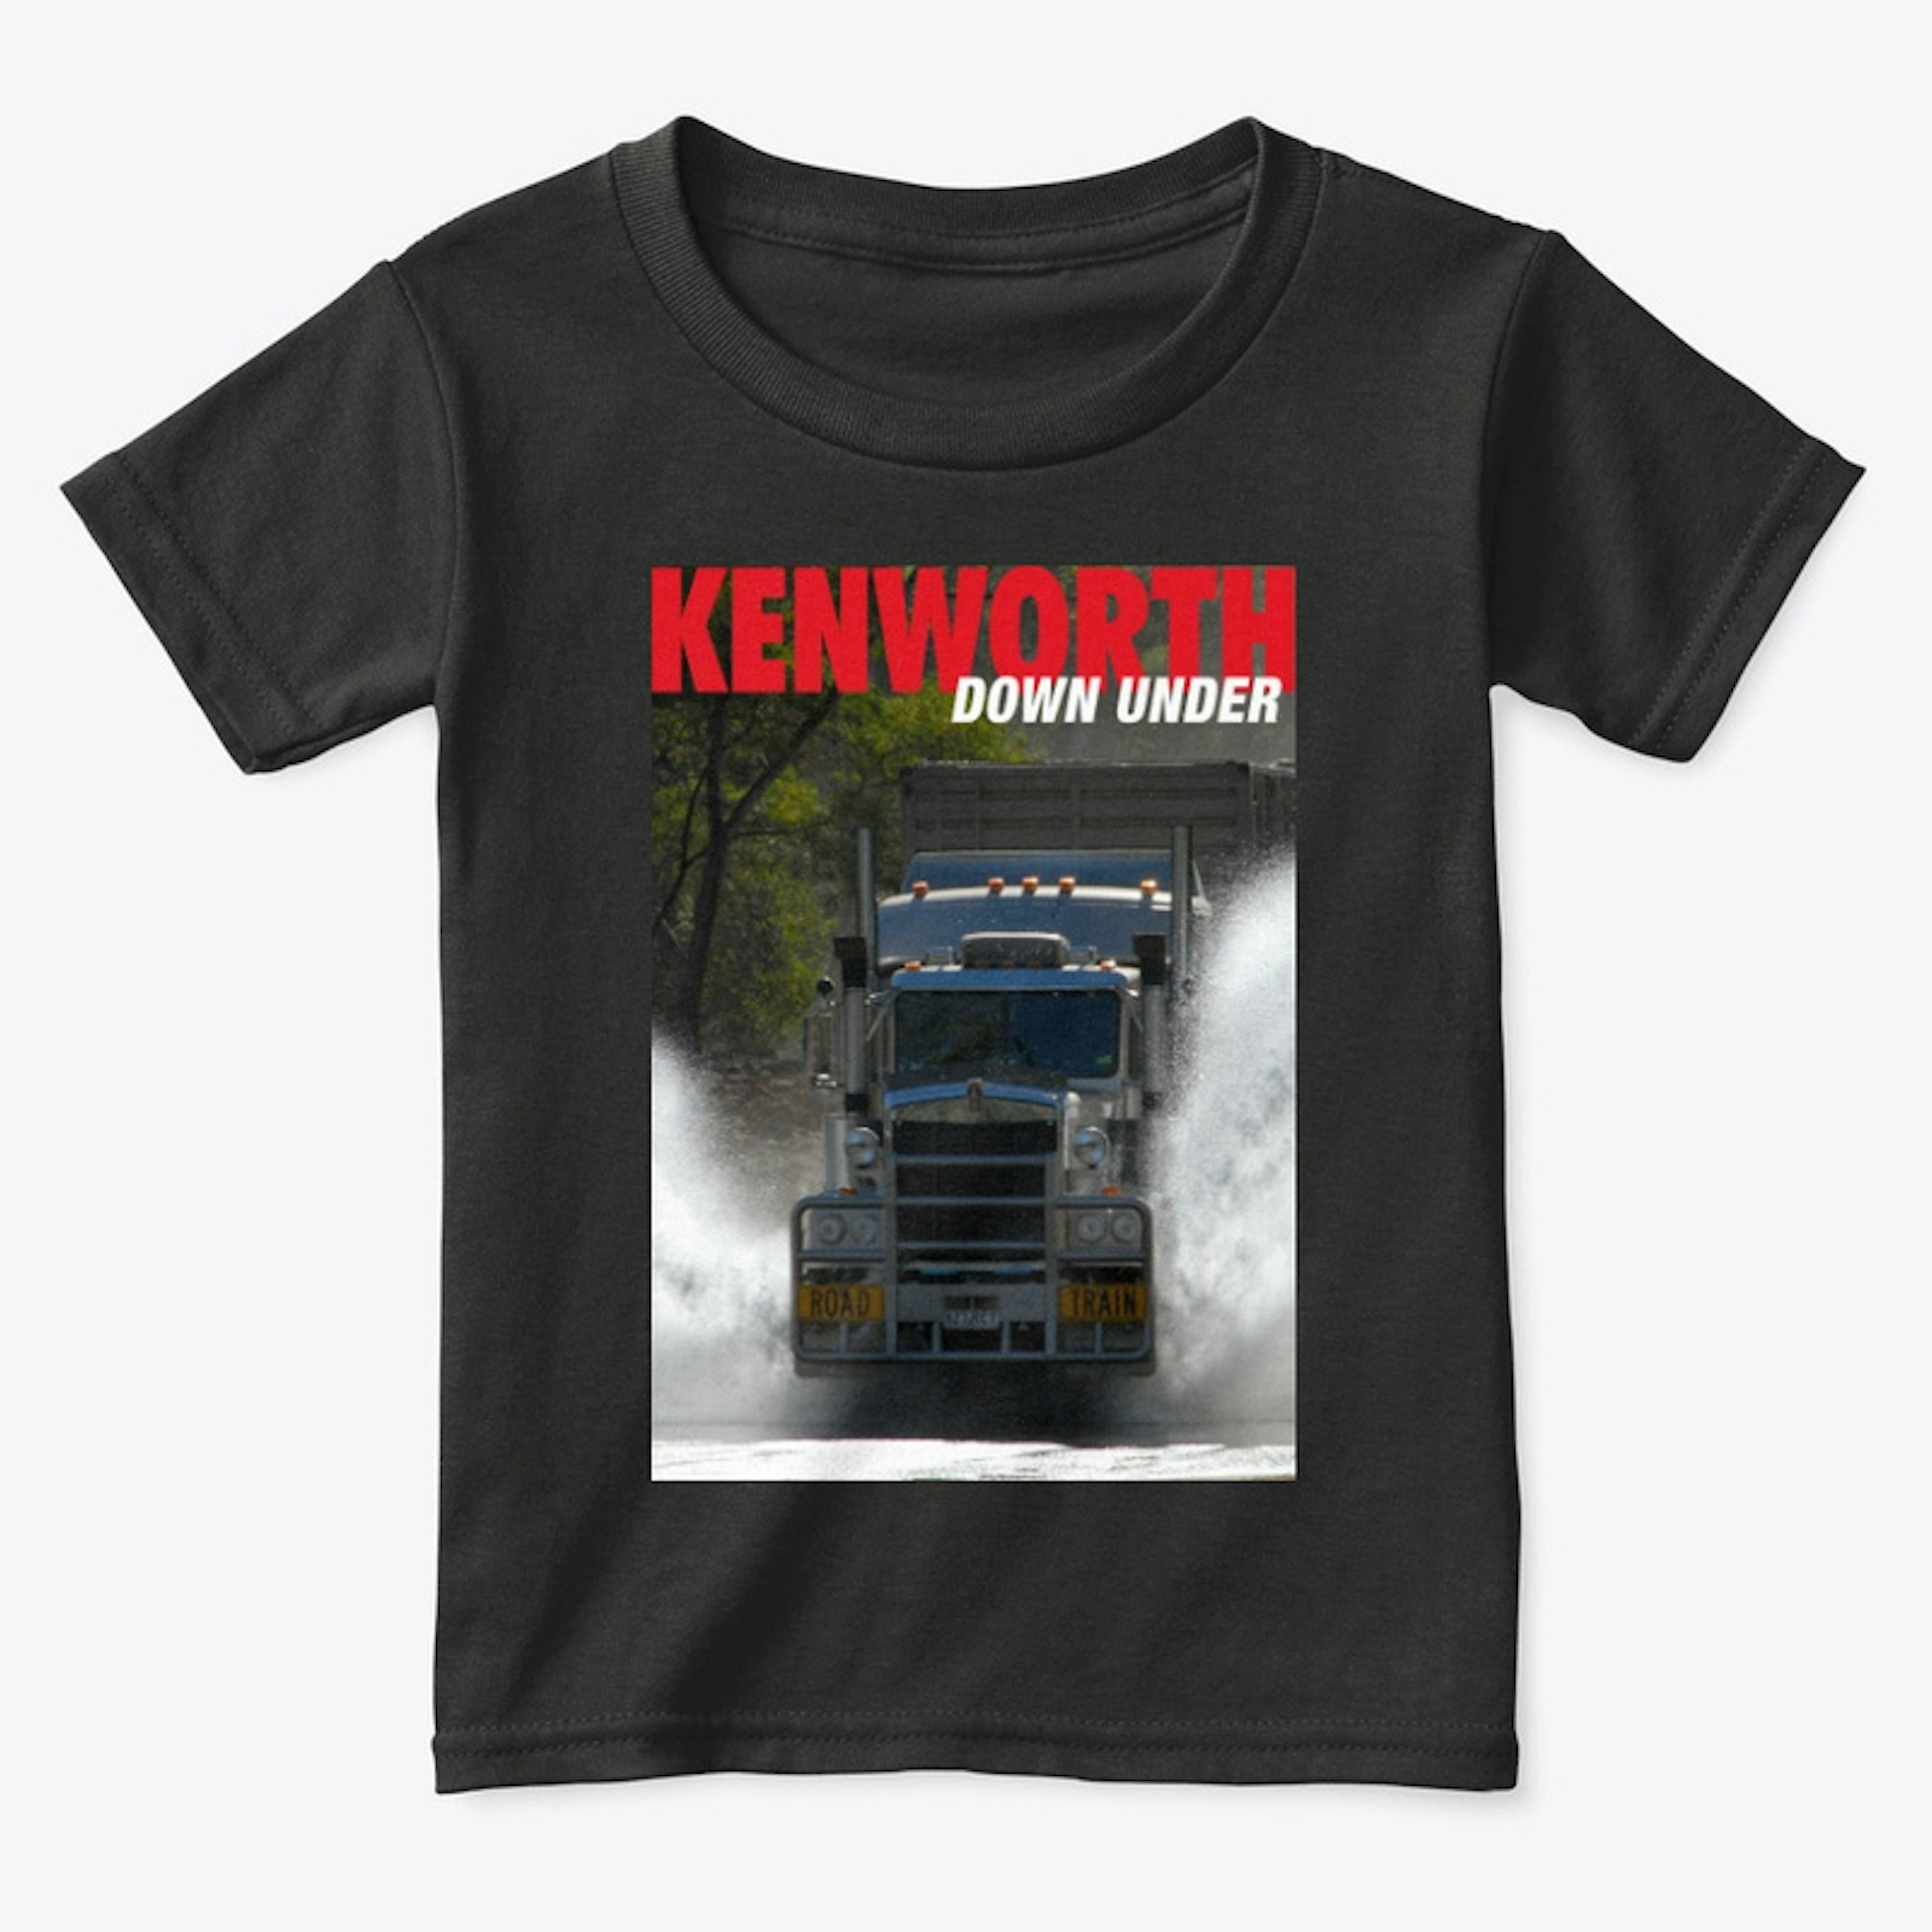 Kenworth C509 Road train 